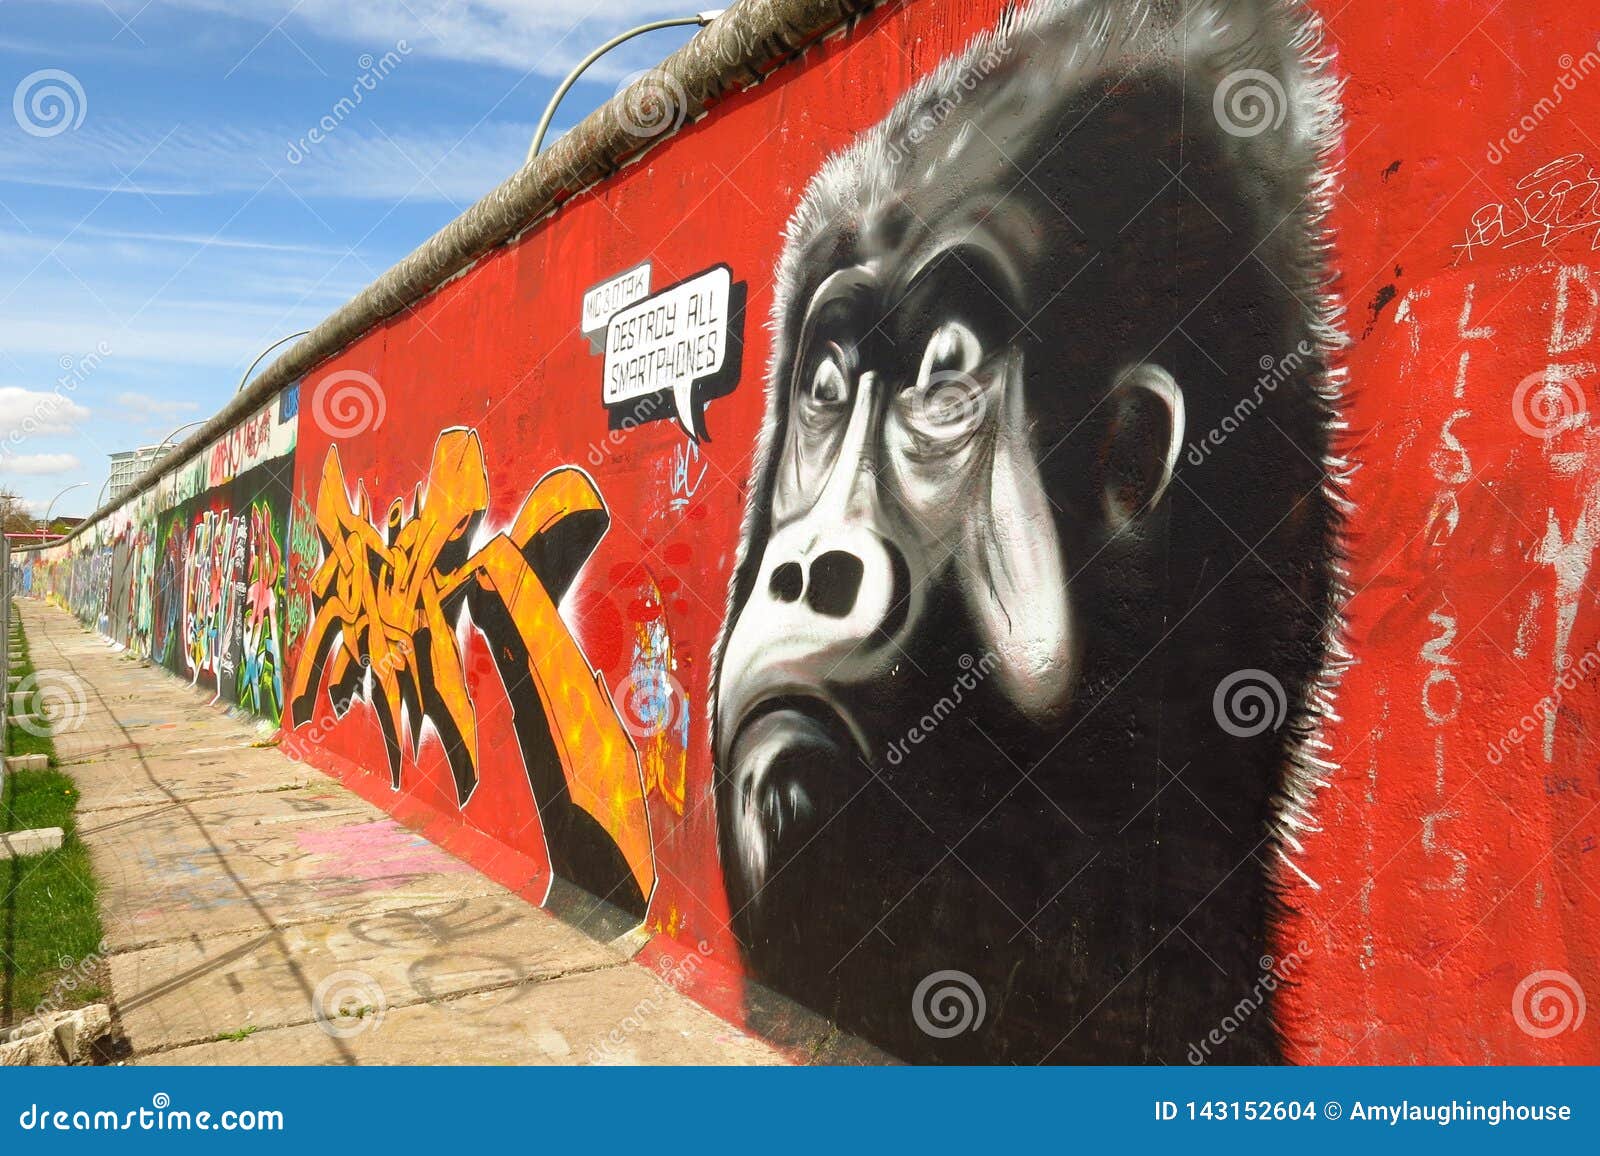 Berlin Wall East Side Gallery Gorilla Street Art Graffiti Mural Editorial Stock Image Image Of Funky Attraction 143152604